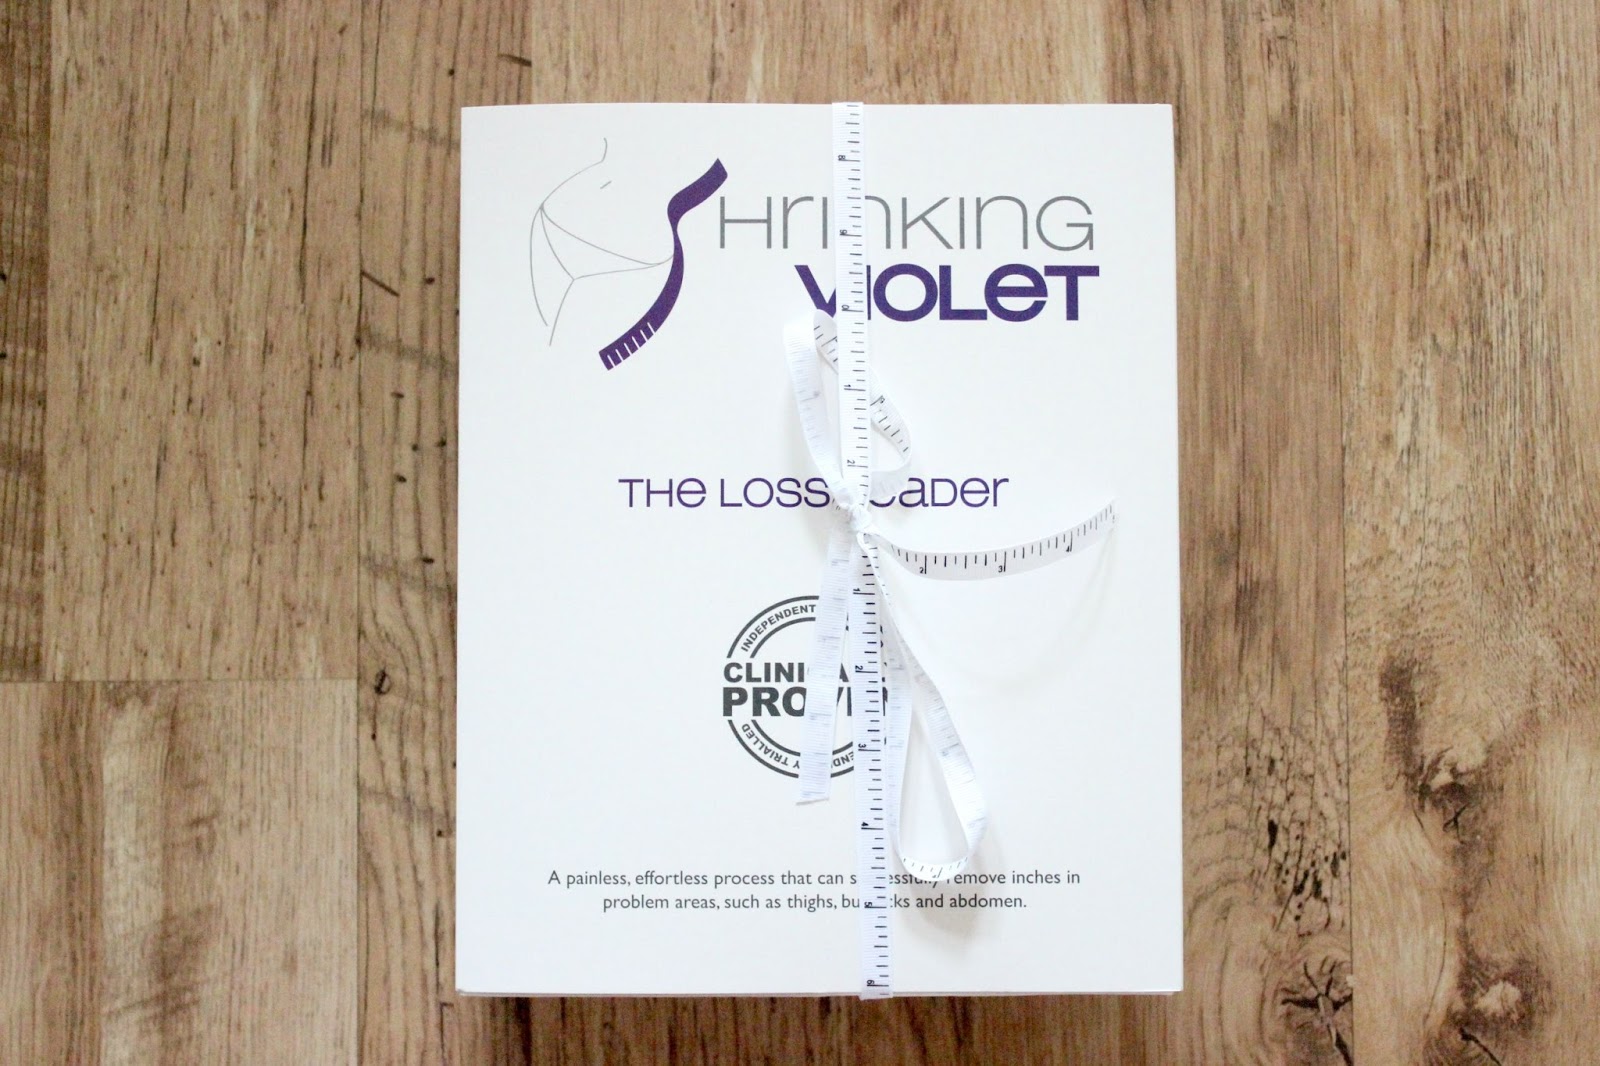 Shrinking Violet At Home Kit Review #getshrinking